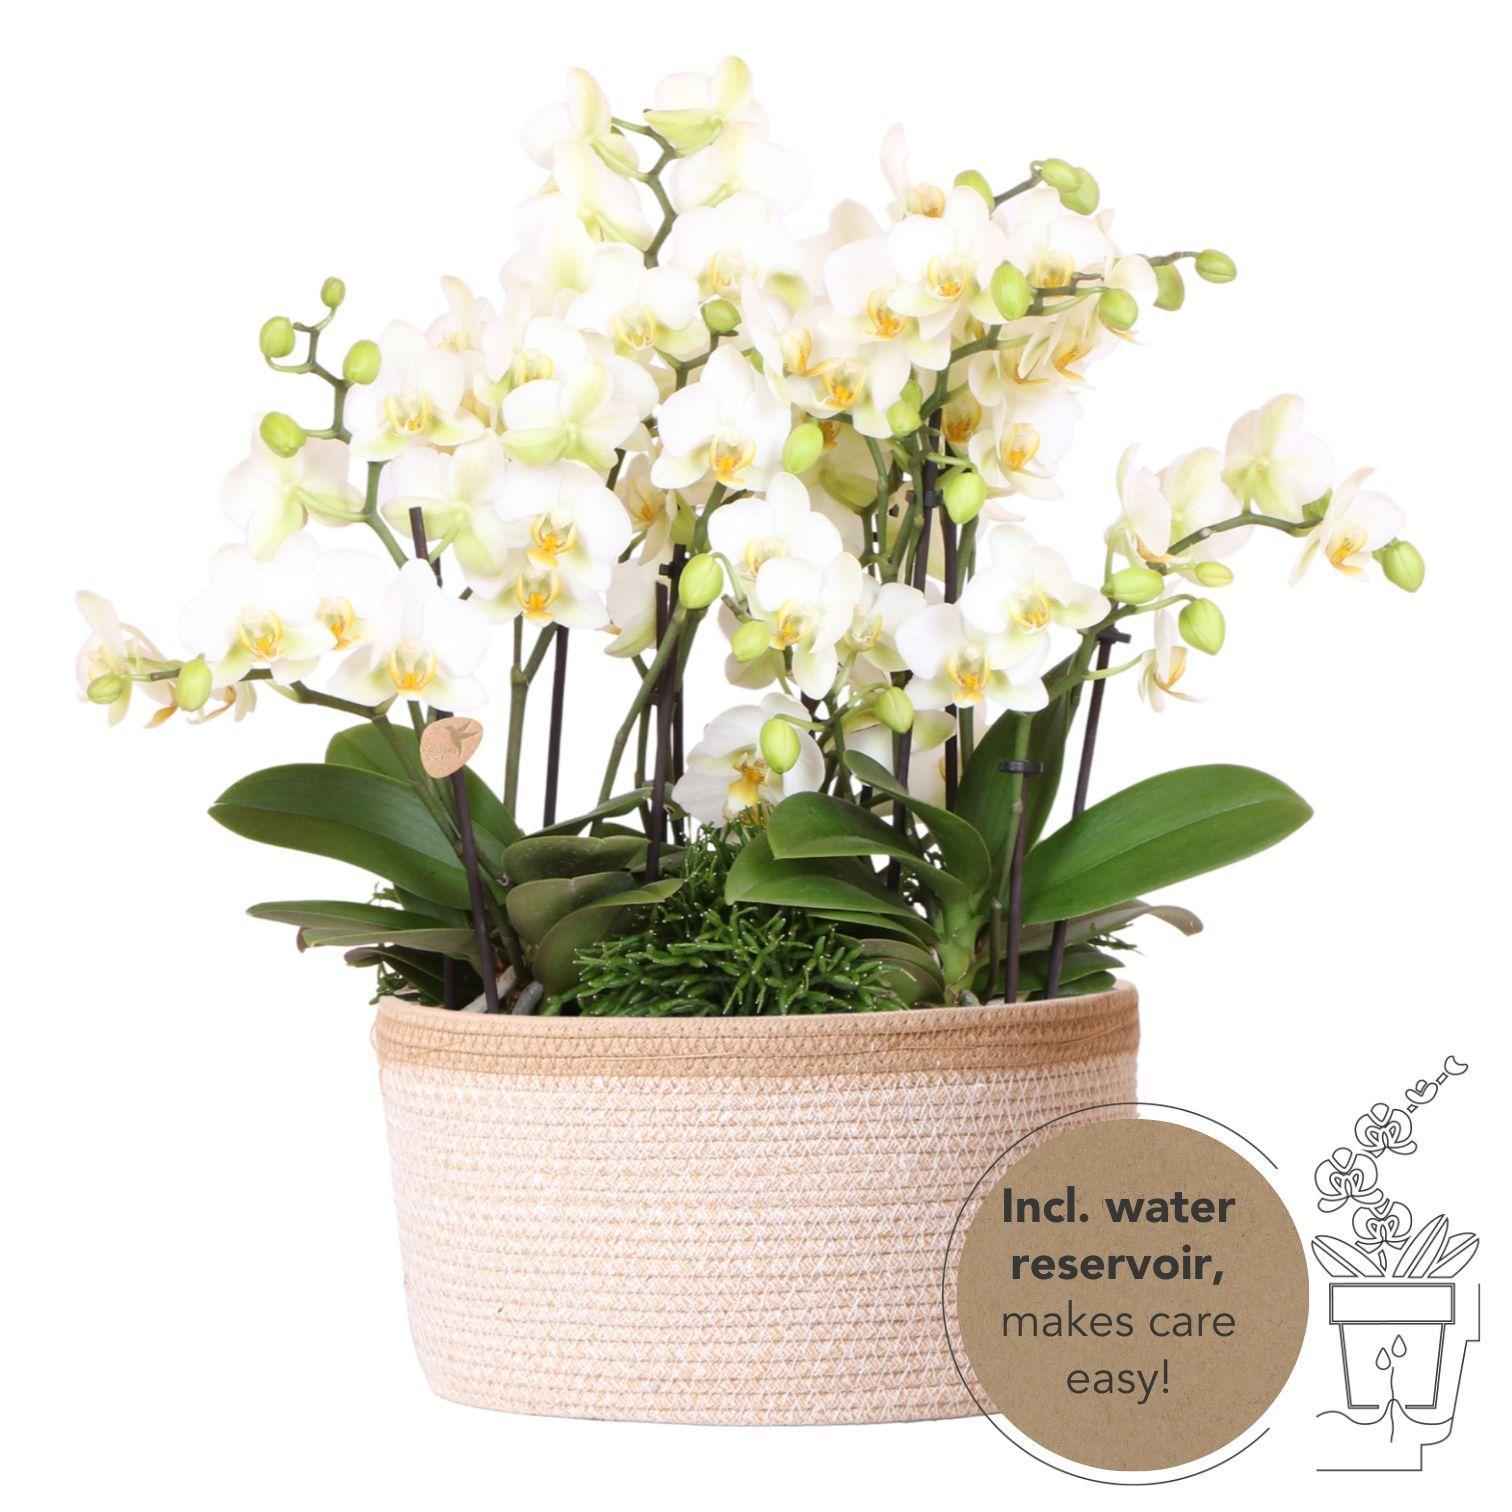 Everspring Witte plantenset in cotton basket incl. Waterreservoir | drie witte orchideeën lausanne 9cm en drie groene planten rhipsalis | jungle bouquet wit met zelfvoorzienend wat